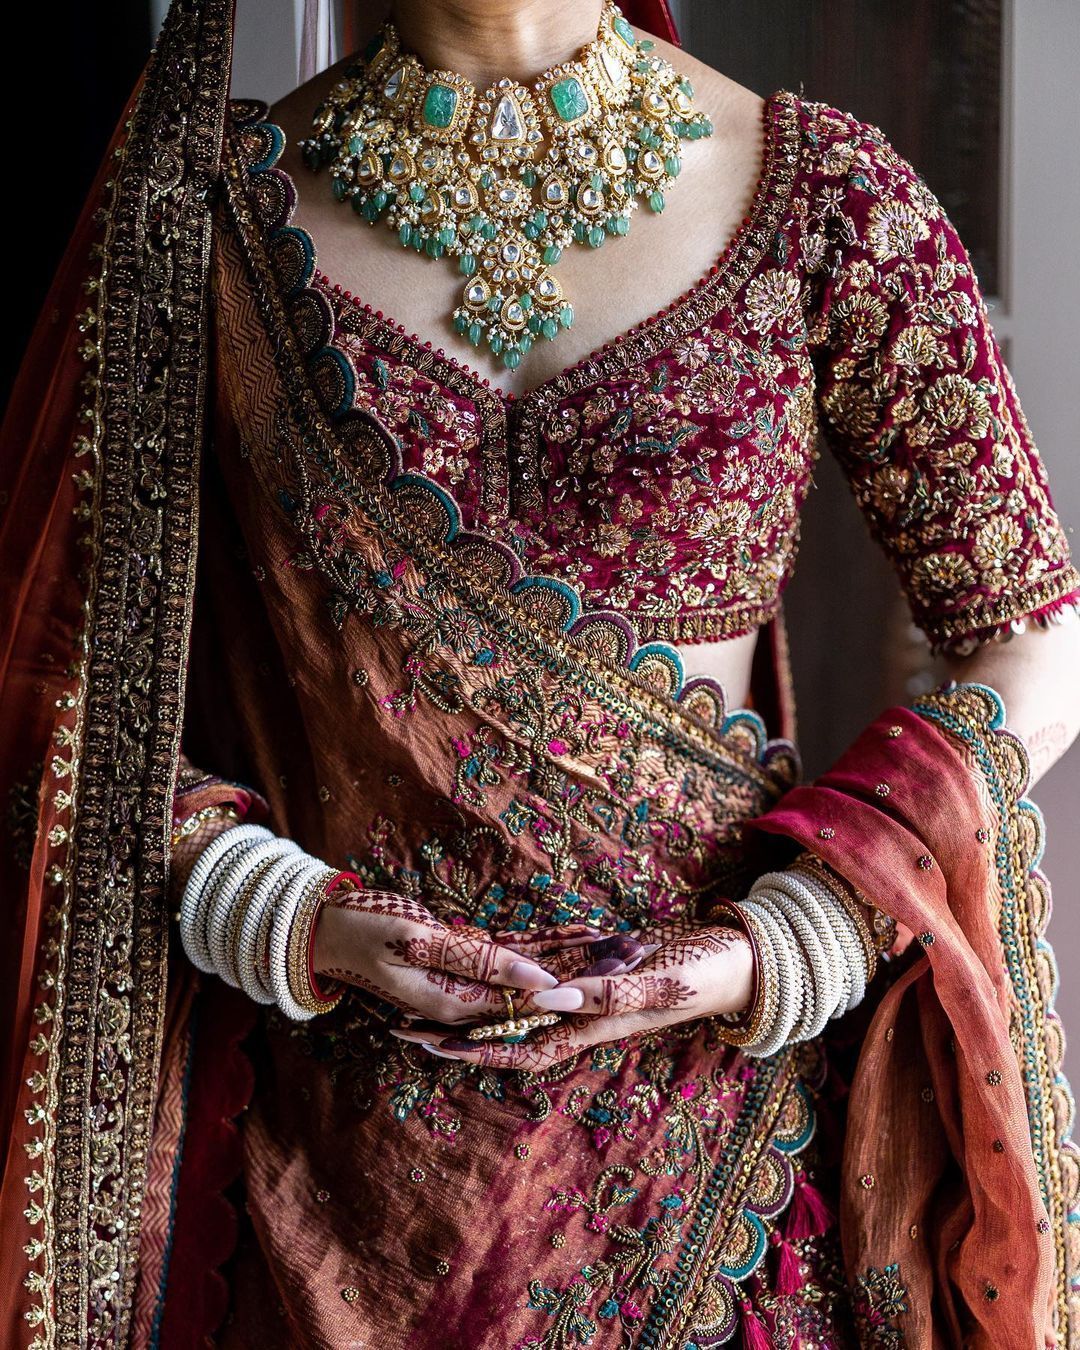 Latest Lehenga Color Combinations That We Wish Bride-To-Be Parineeti Chopra Tries